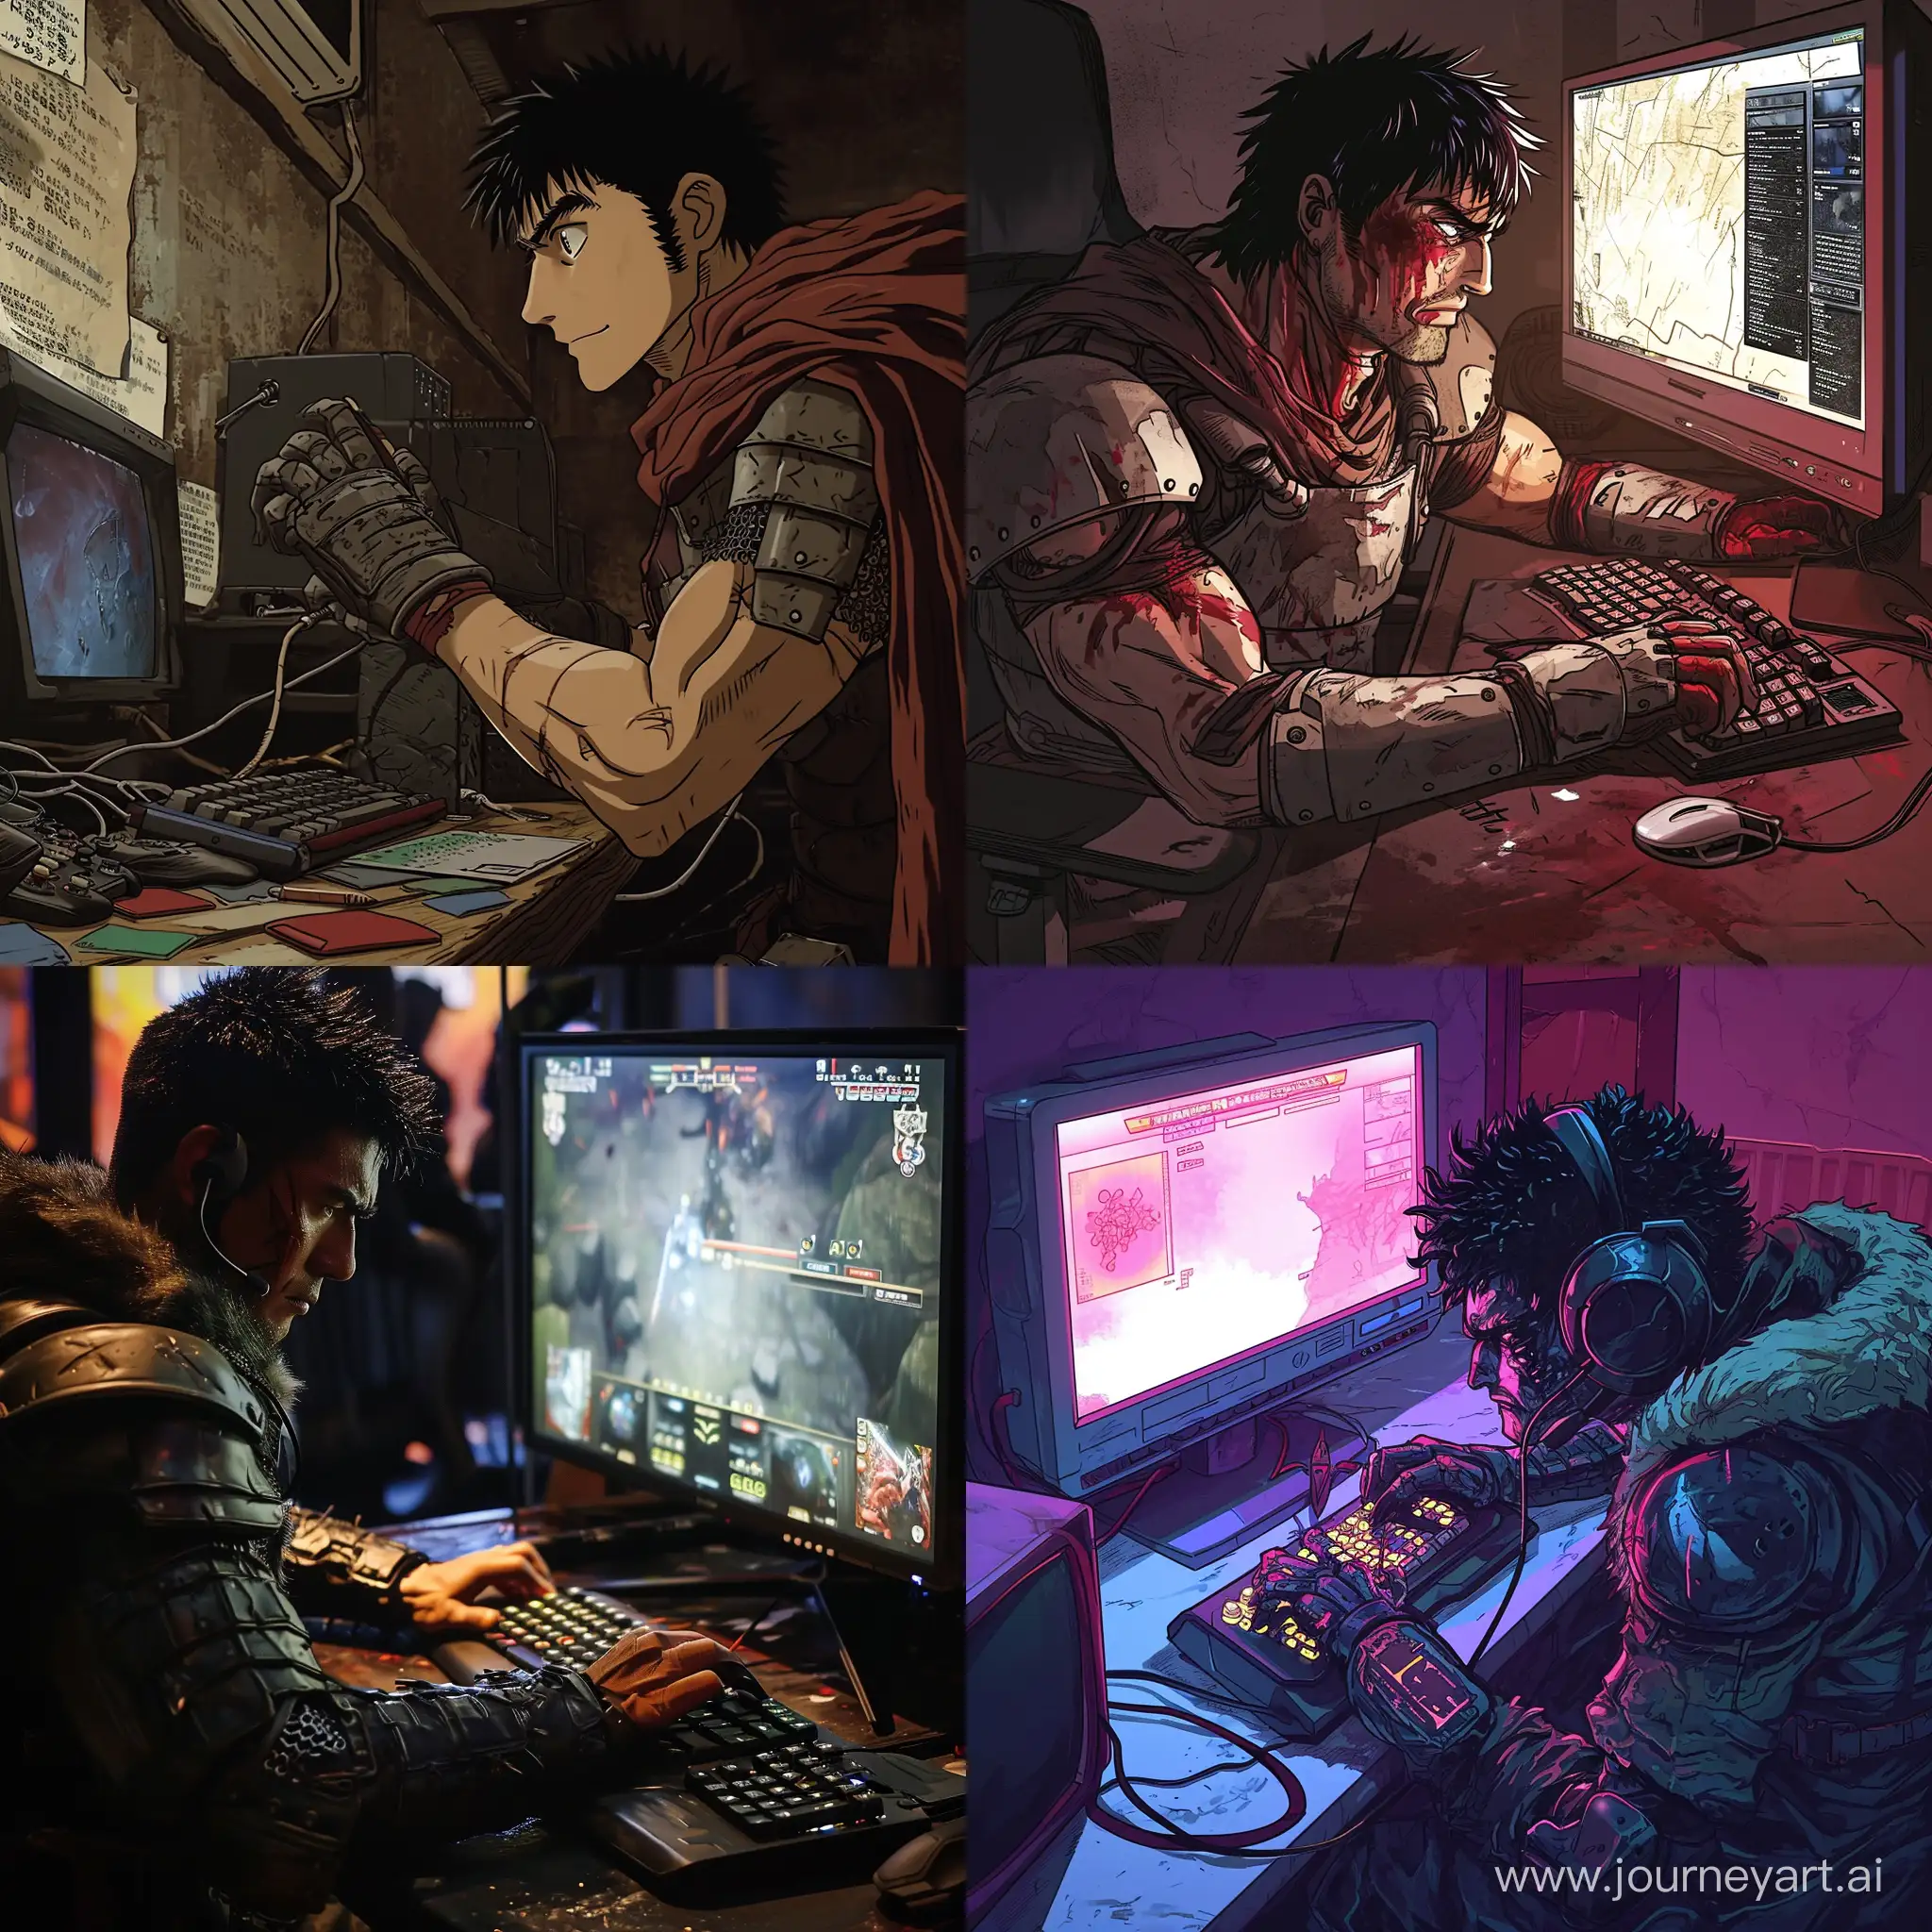 guts from berserk plays computer games